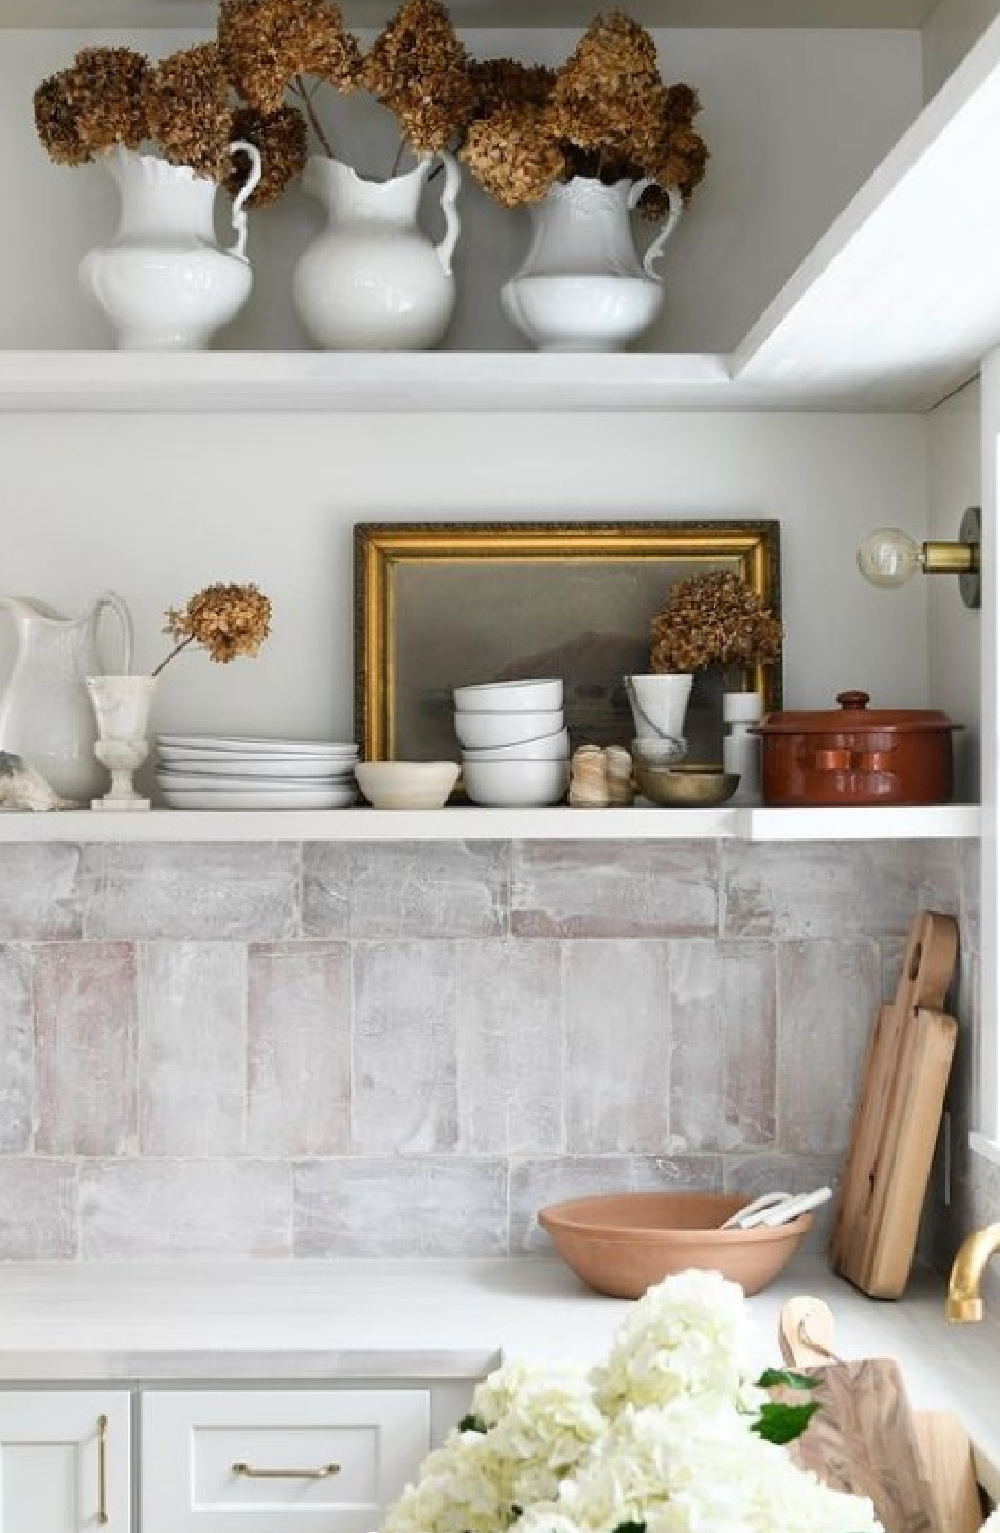 Leanne Ford designed rustic modern kitchen with white shelves, farm sink, and customized tile backsplash. #leanneford #modernrustic